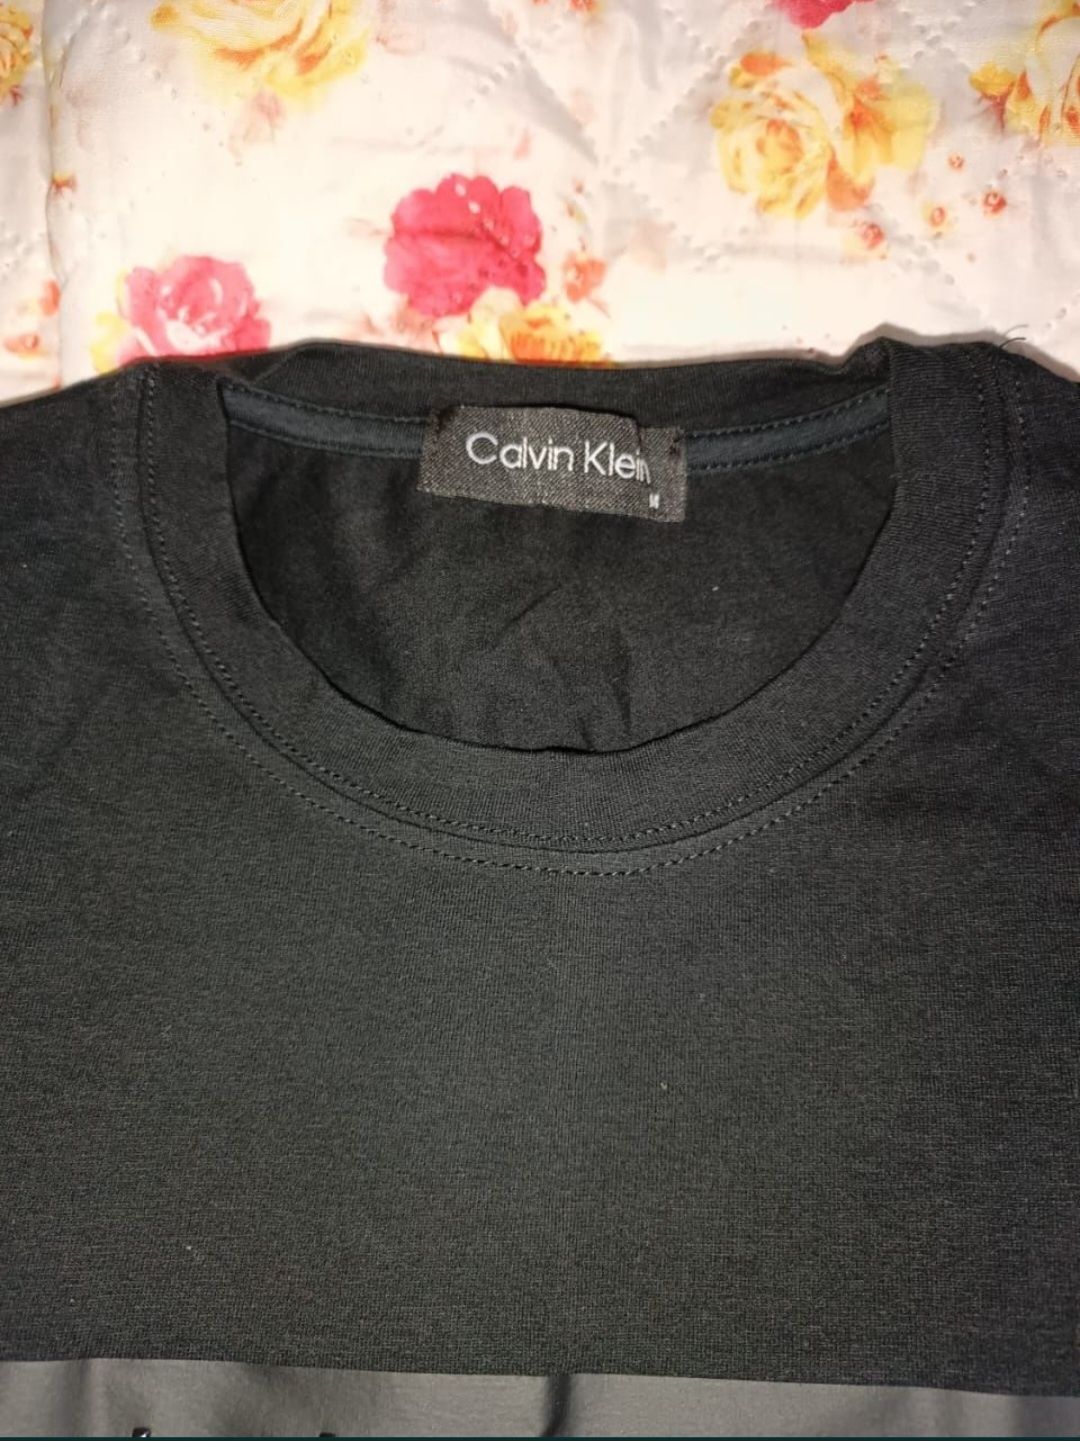 Фирменная футболка, Calvin Klein.